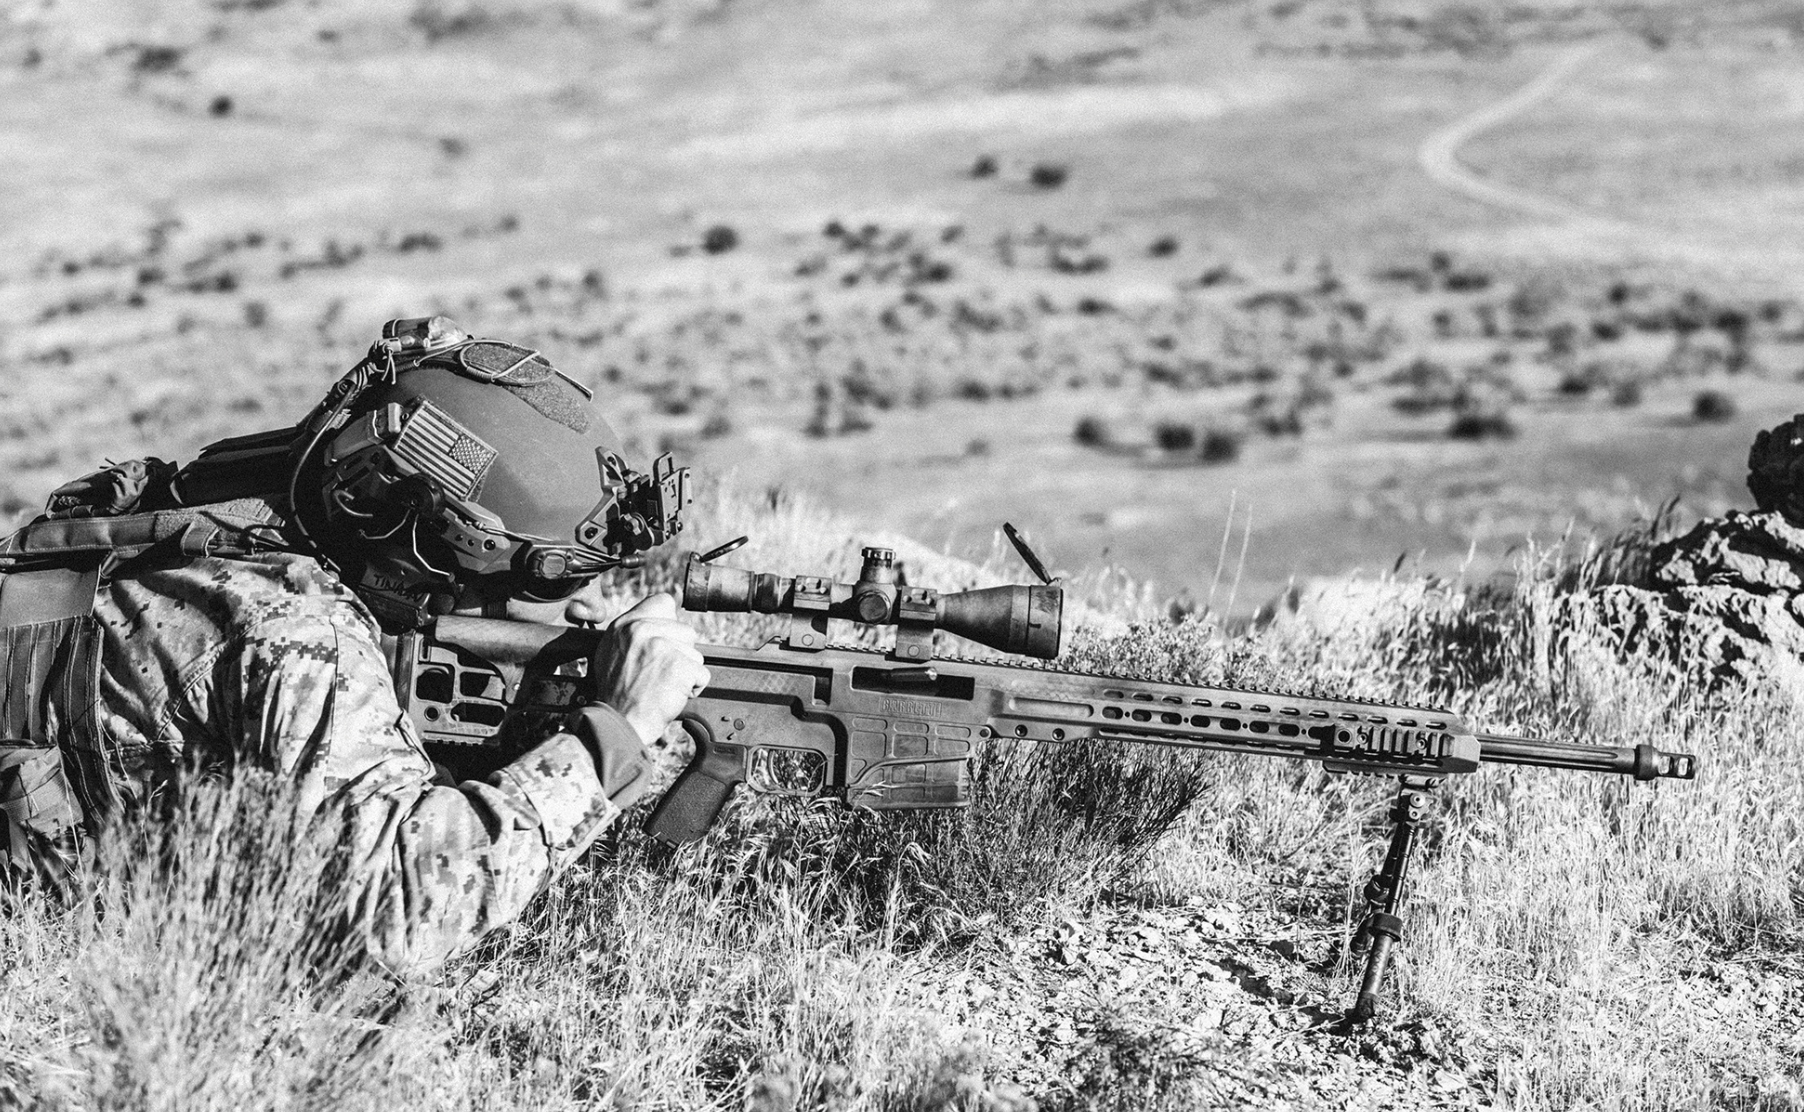 DIY Nerf Elite Sniper Rifle from Cardboard on 5 Bullets 